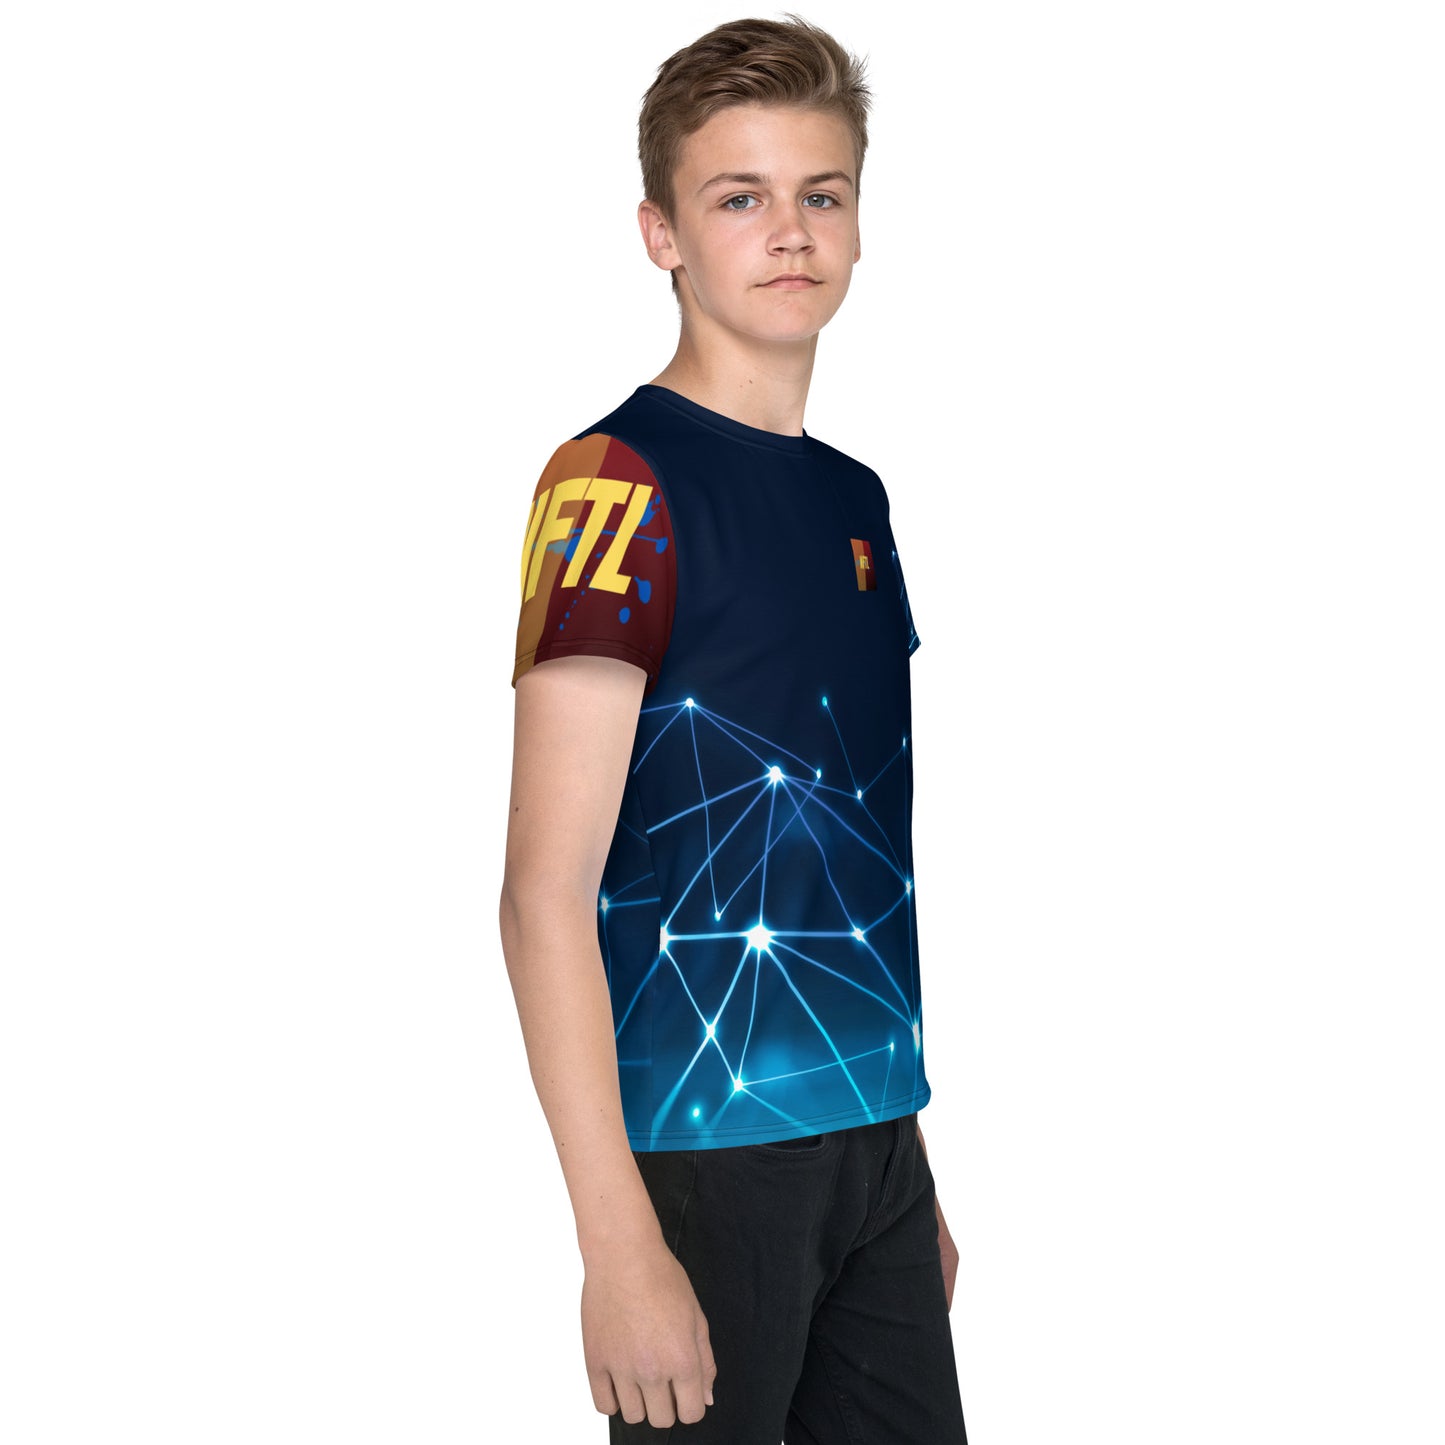 Unisex youth t-shirt $NFTL